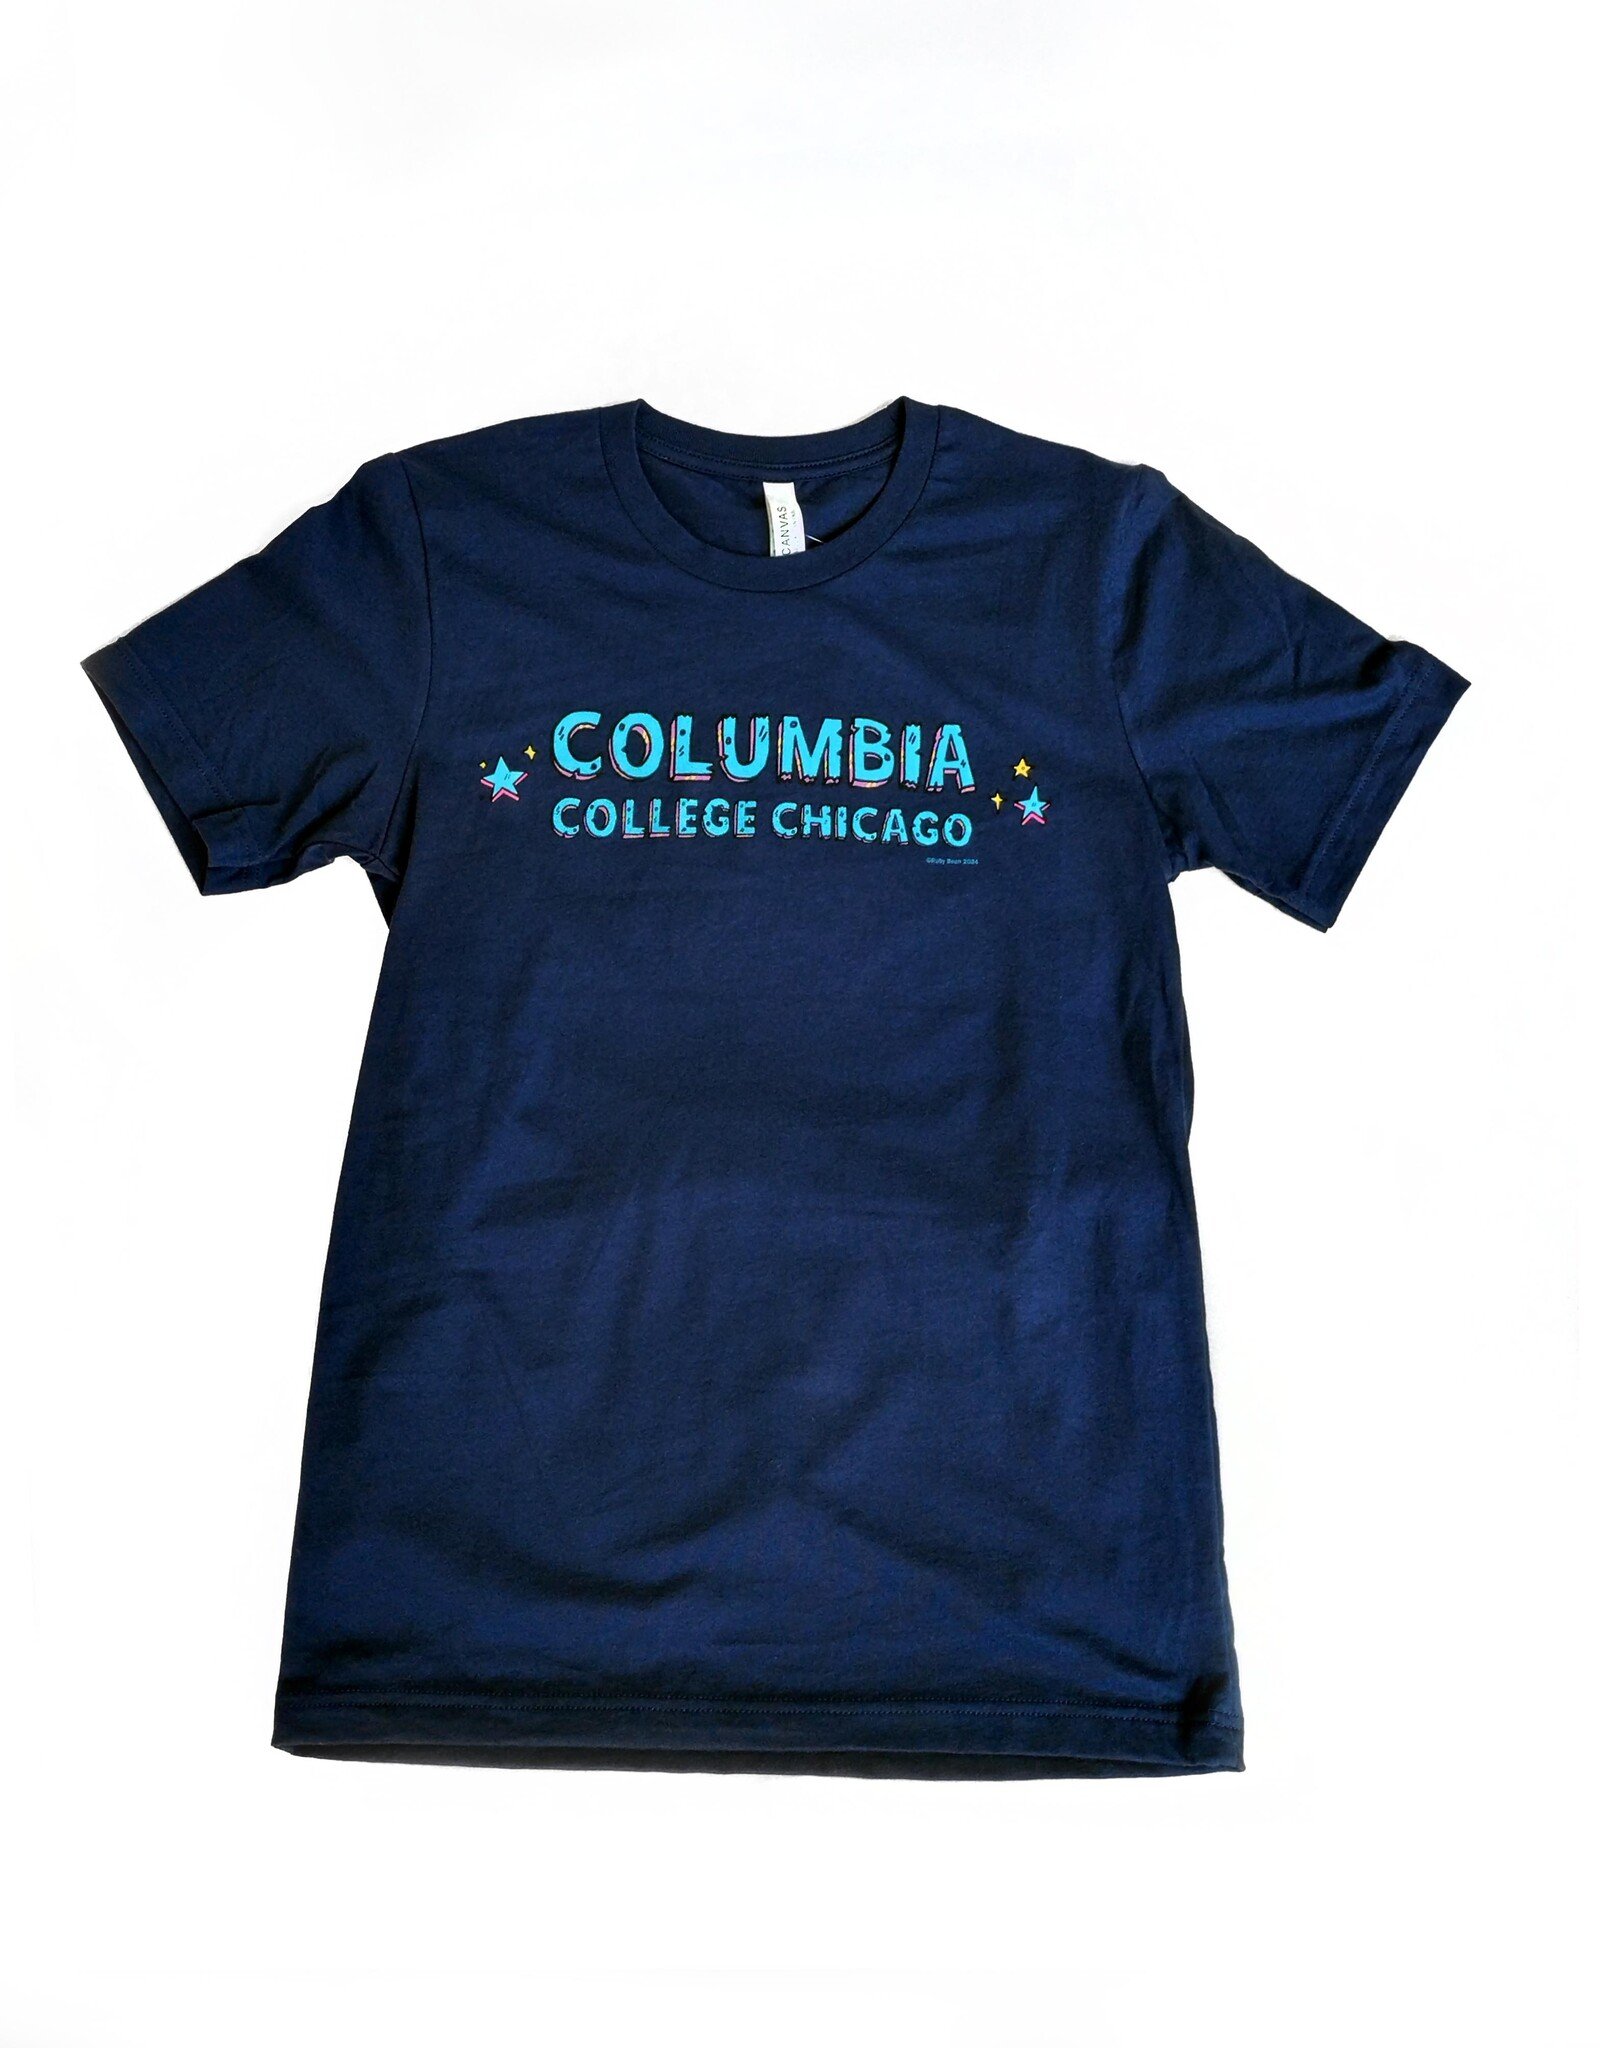 Columbia Tshirt Designed by Ruby Bean